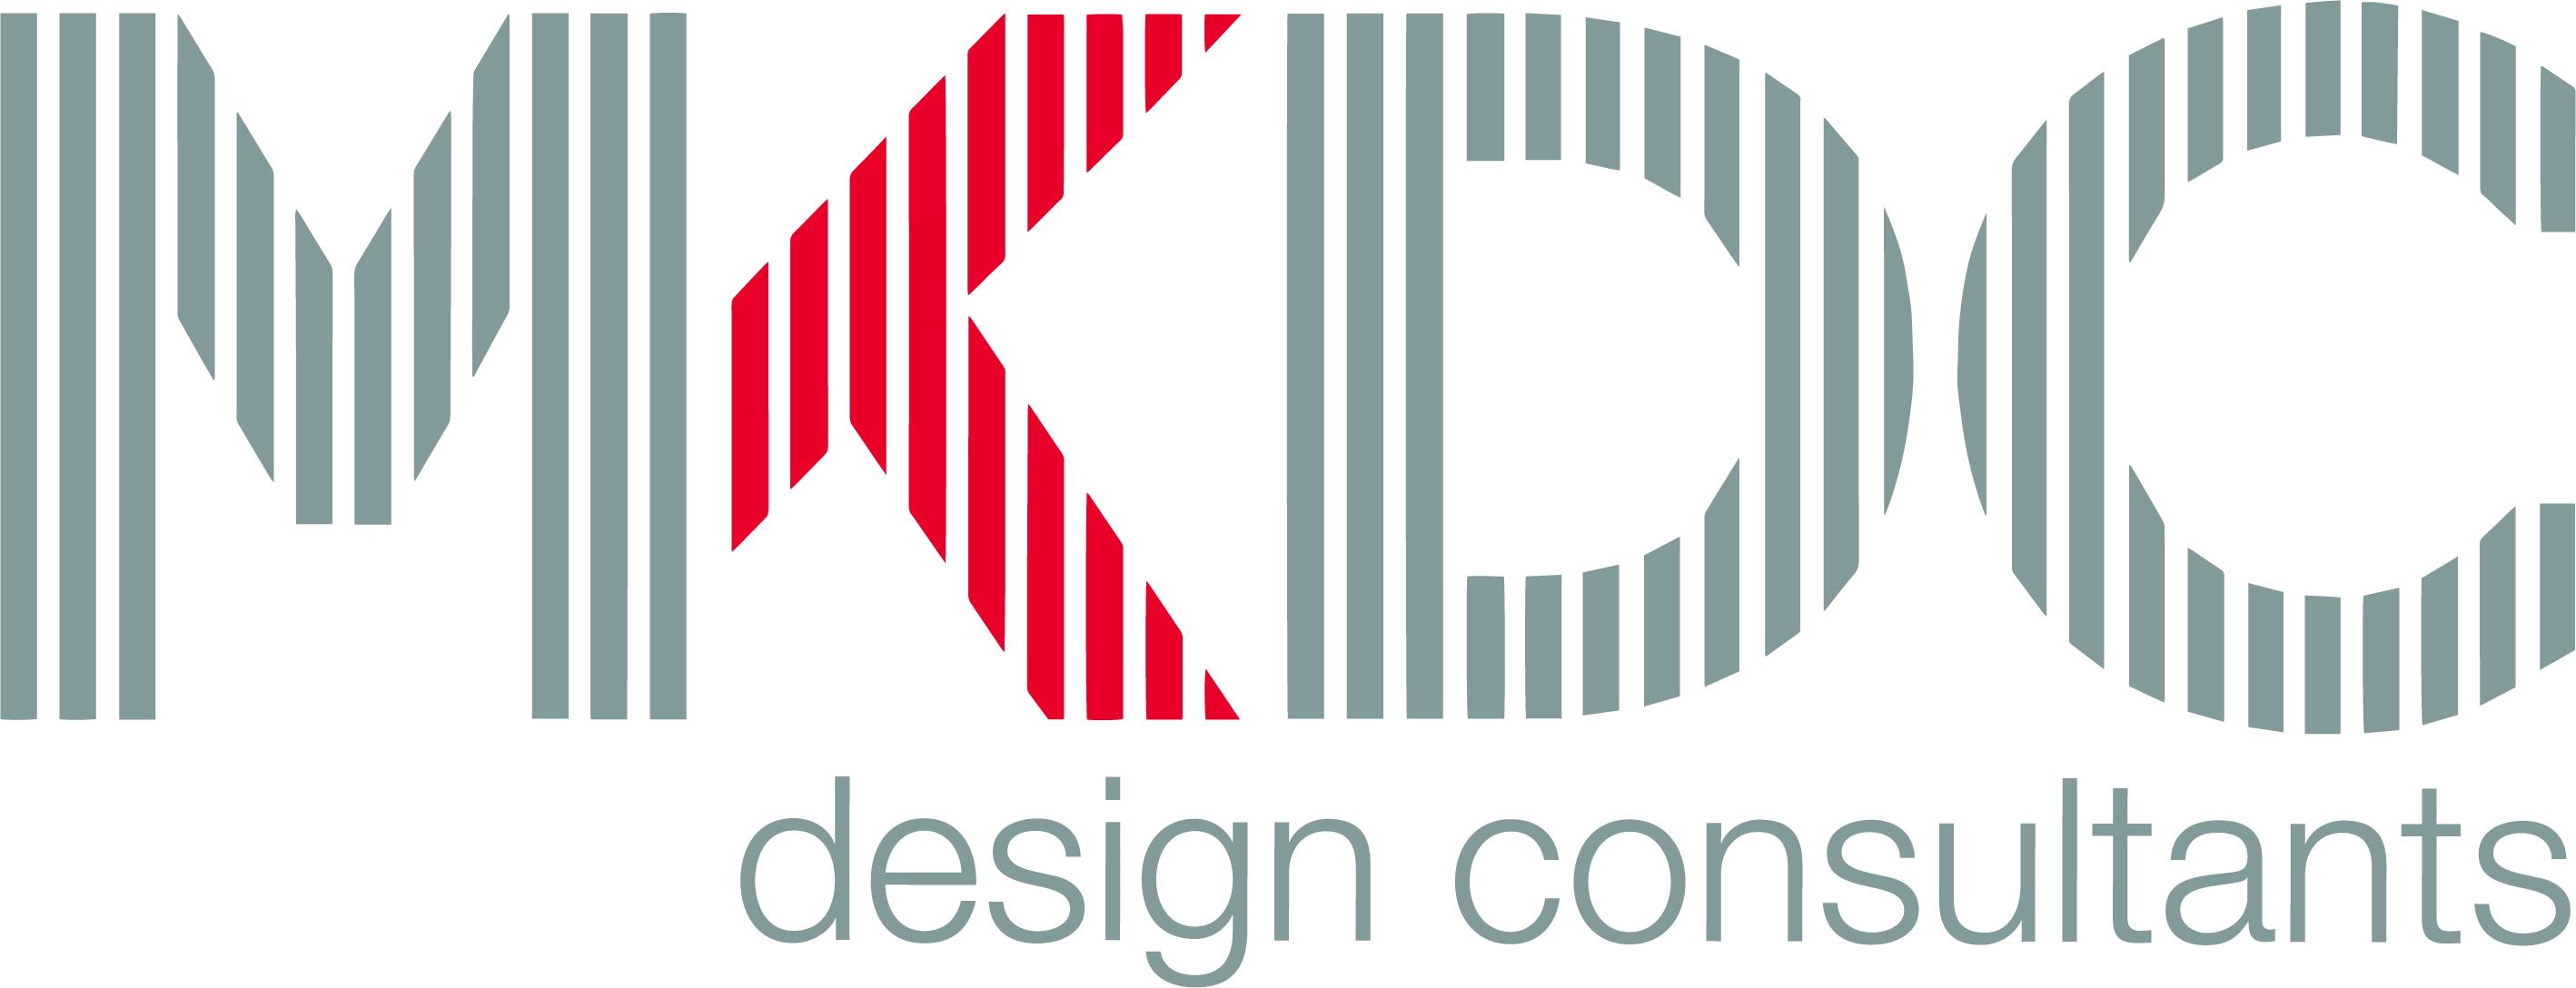 MKDC Design Consultants